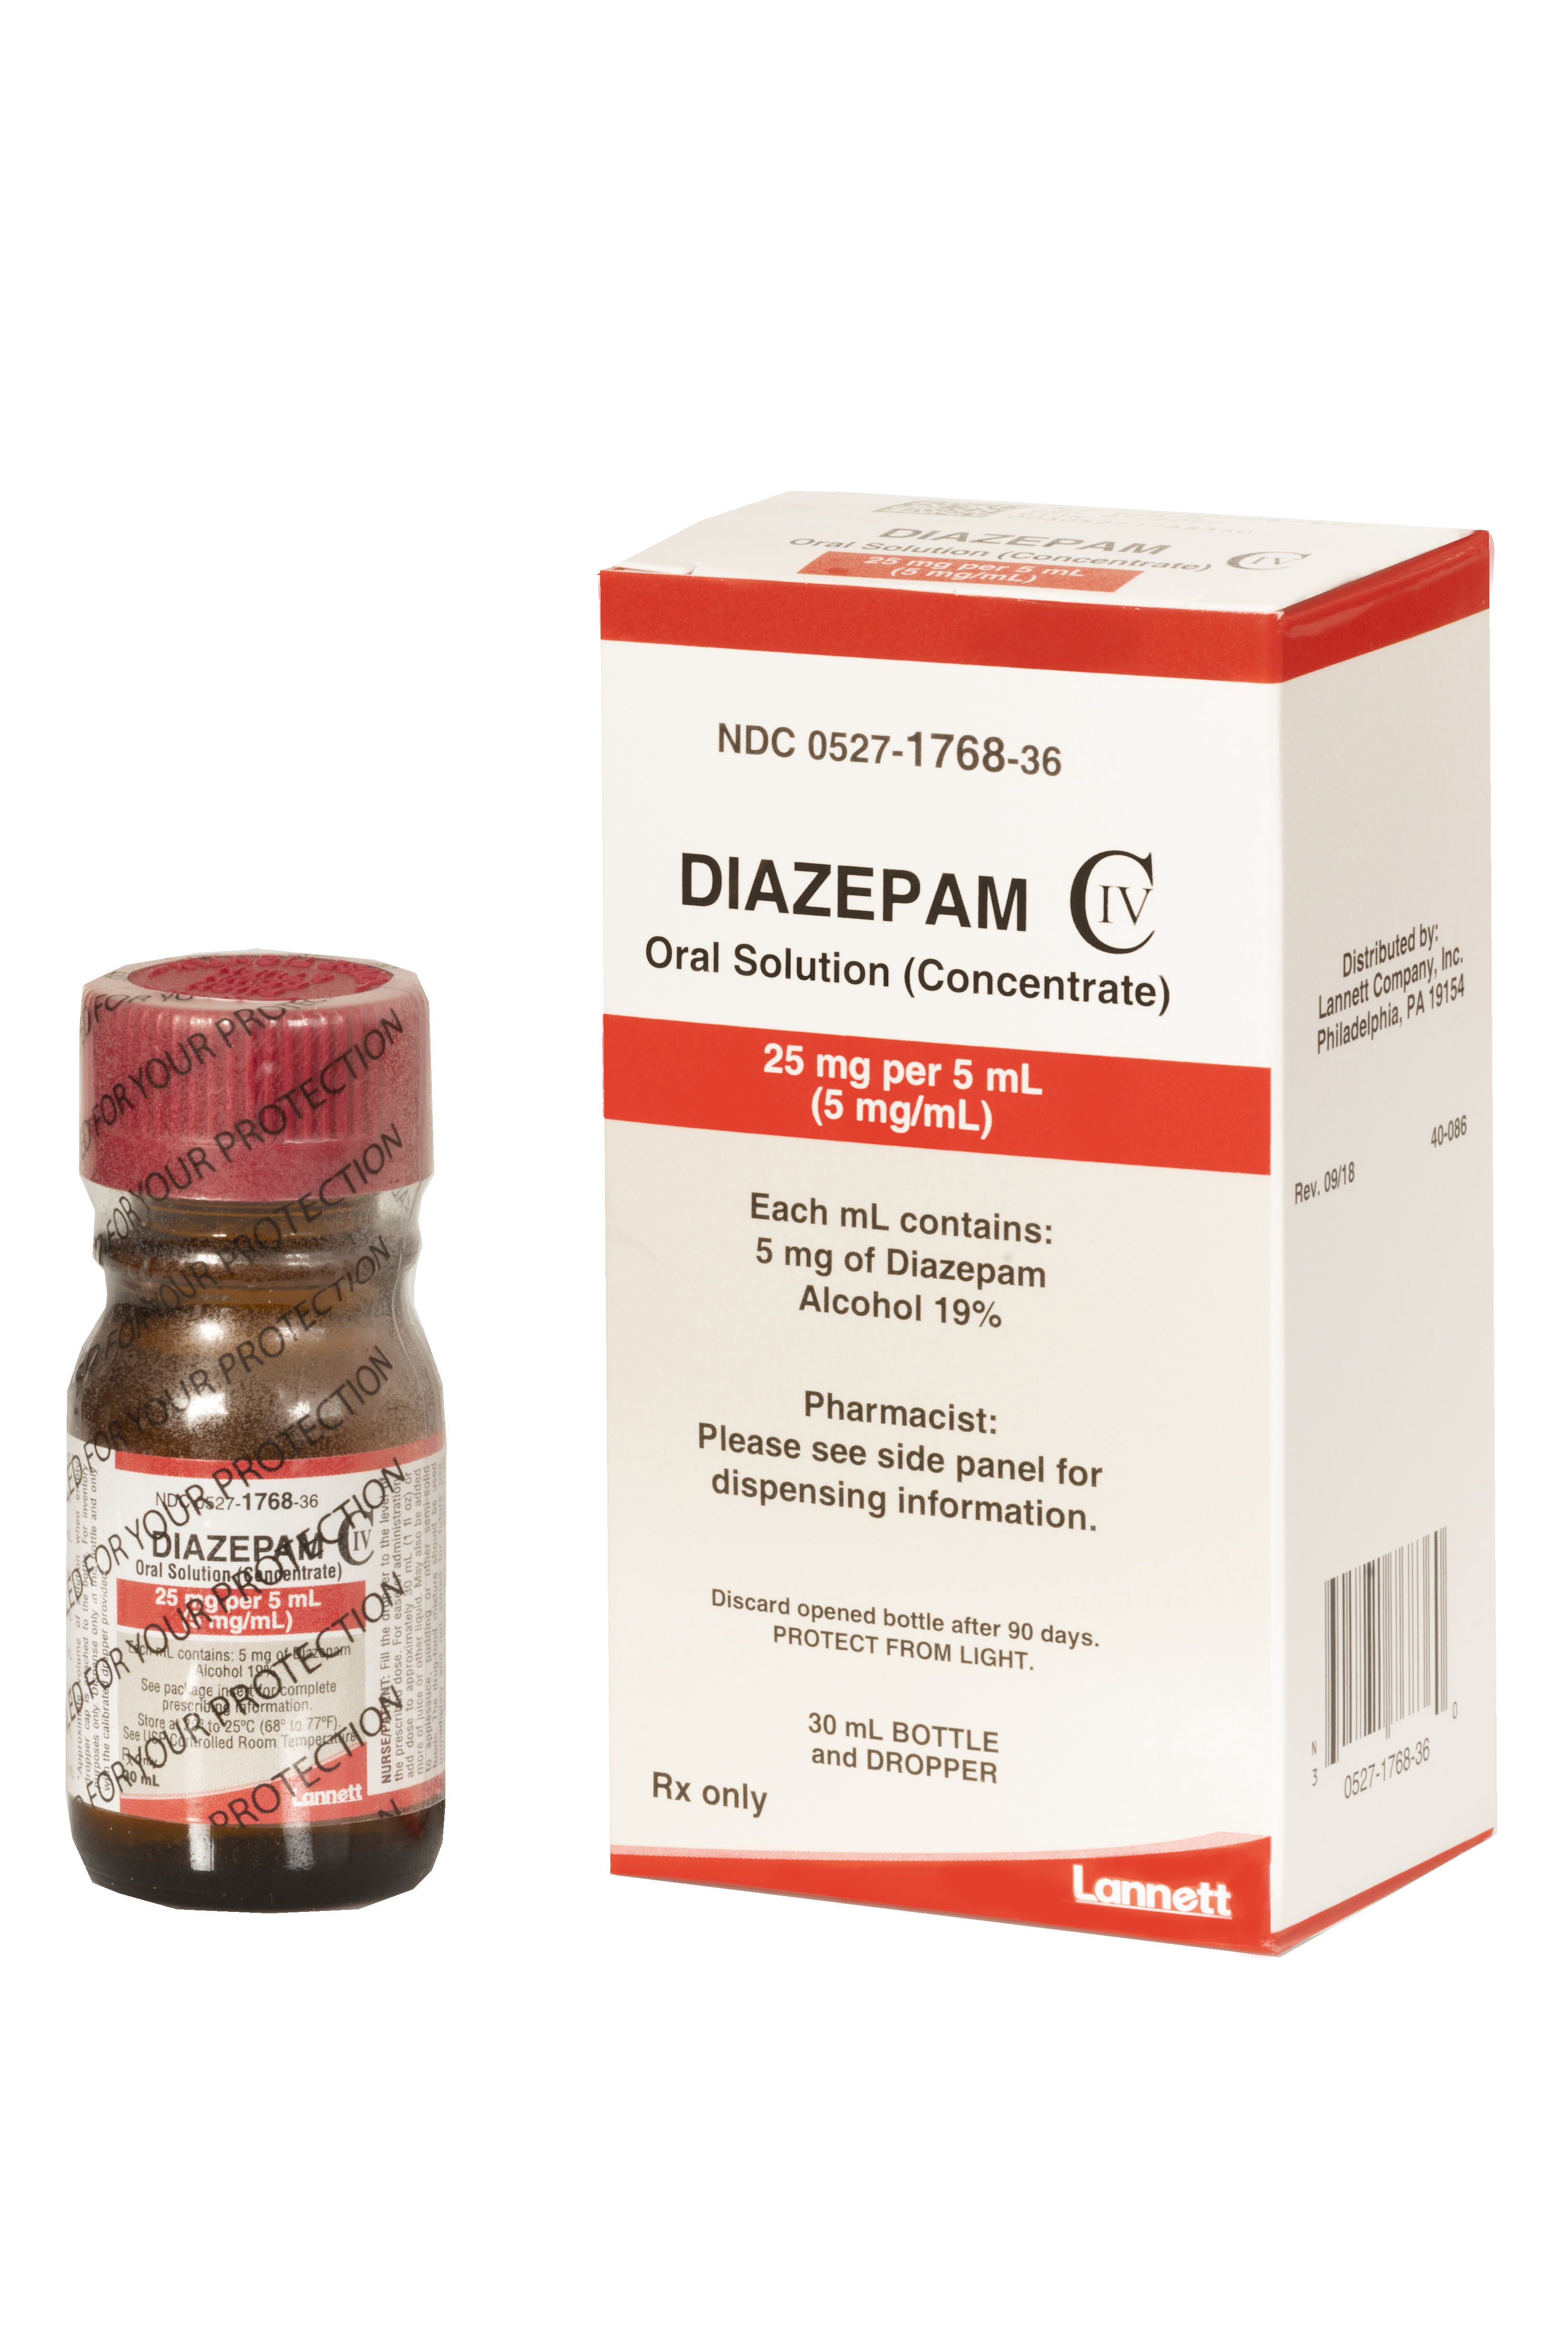 Diazepam CIV